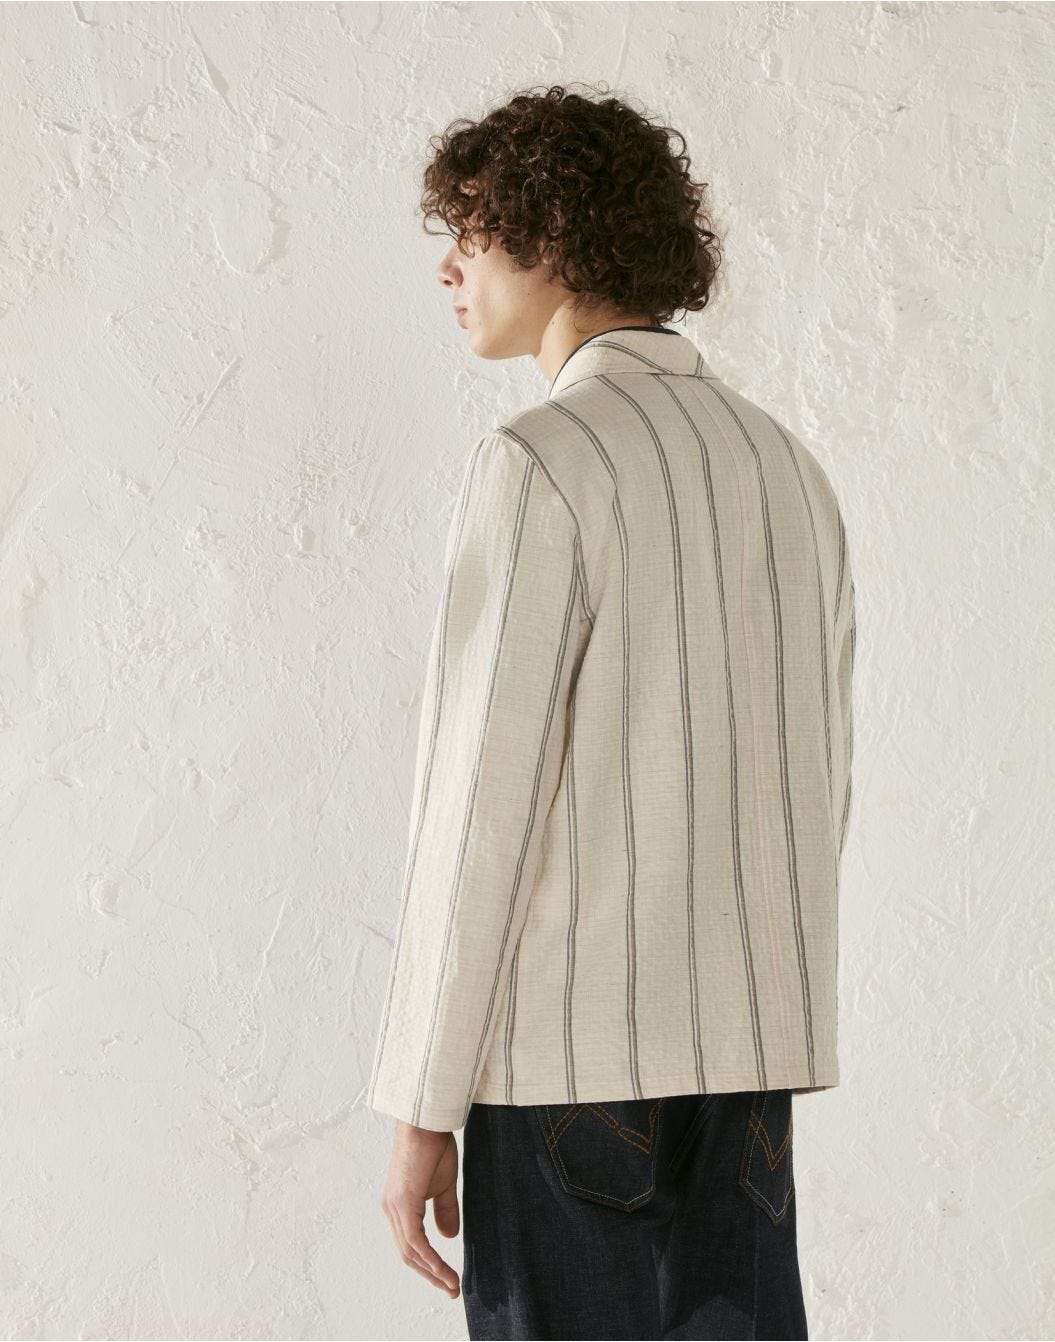 Multicolour-striped fabric shirt jacket